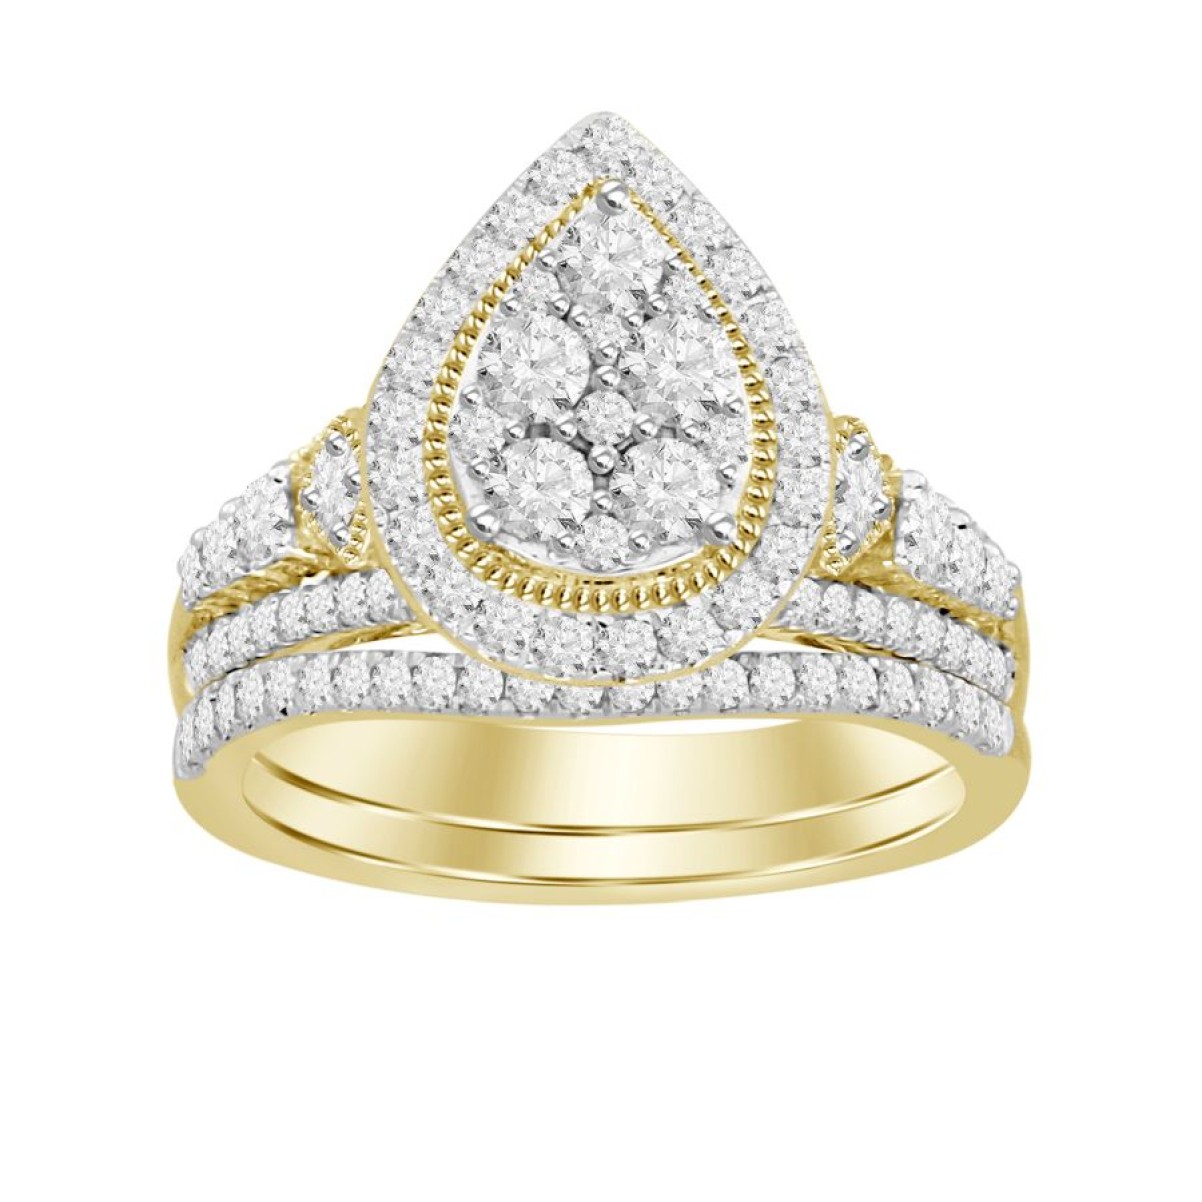 BRIDAL RING SET 1.00CT ROUND DIAMOND 14K YELLOW GOLD